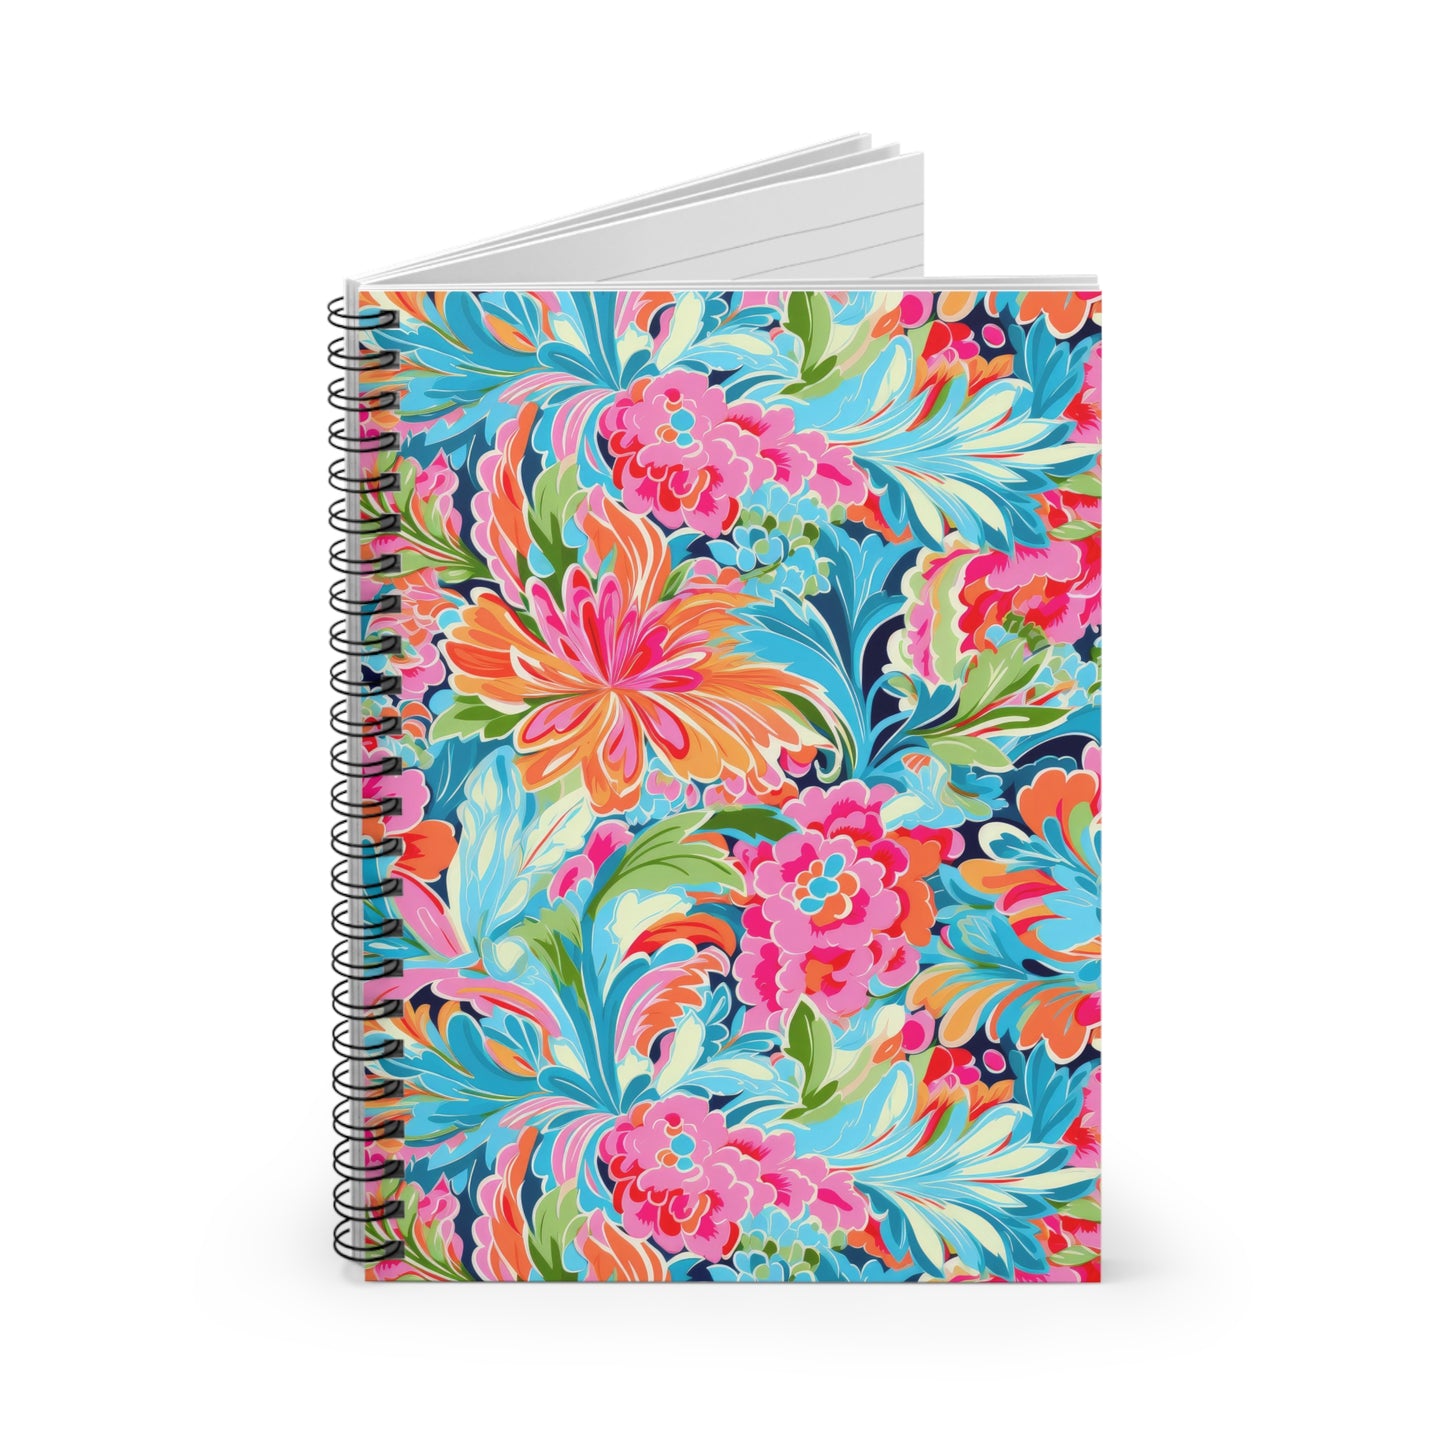 Tropical Radiance: Bursting Summer Blooms in Teal, Orange, and Pink Spiral Ruled Line Notebook